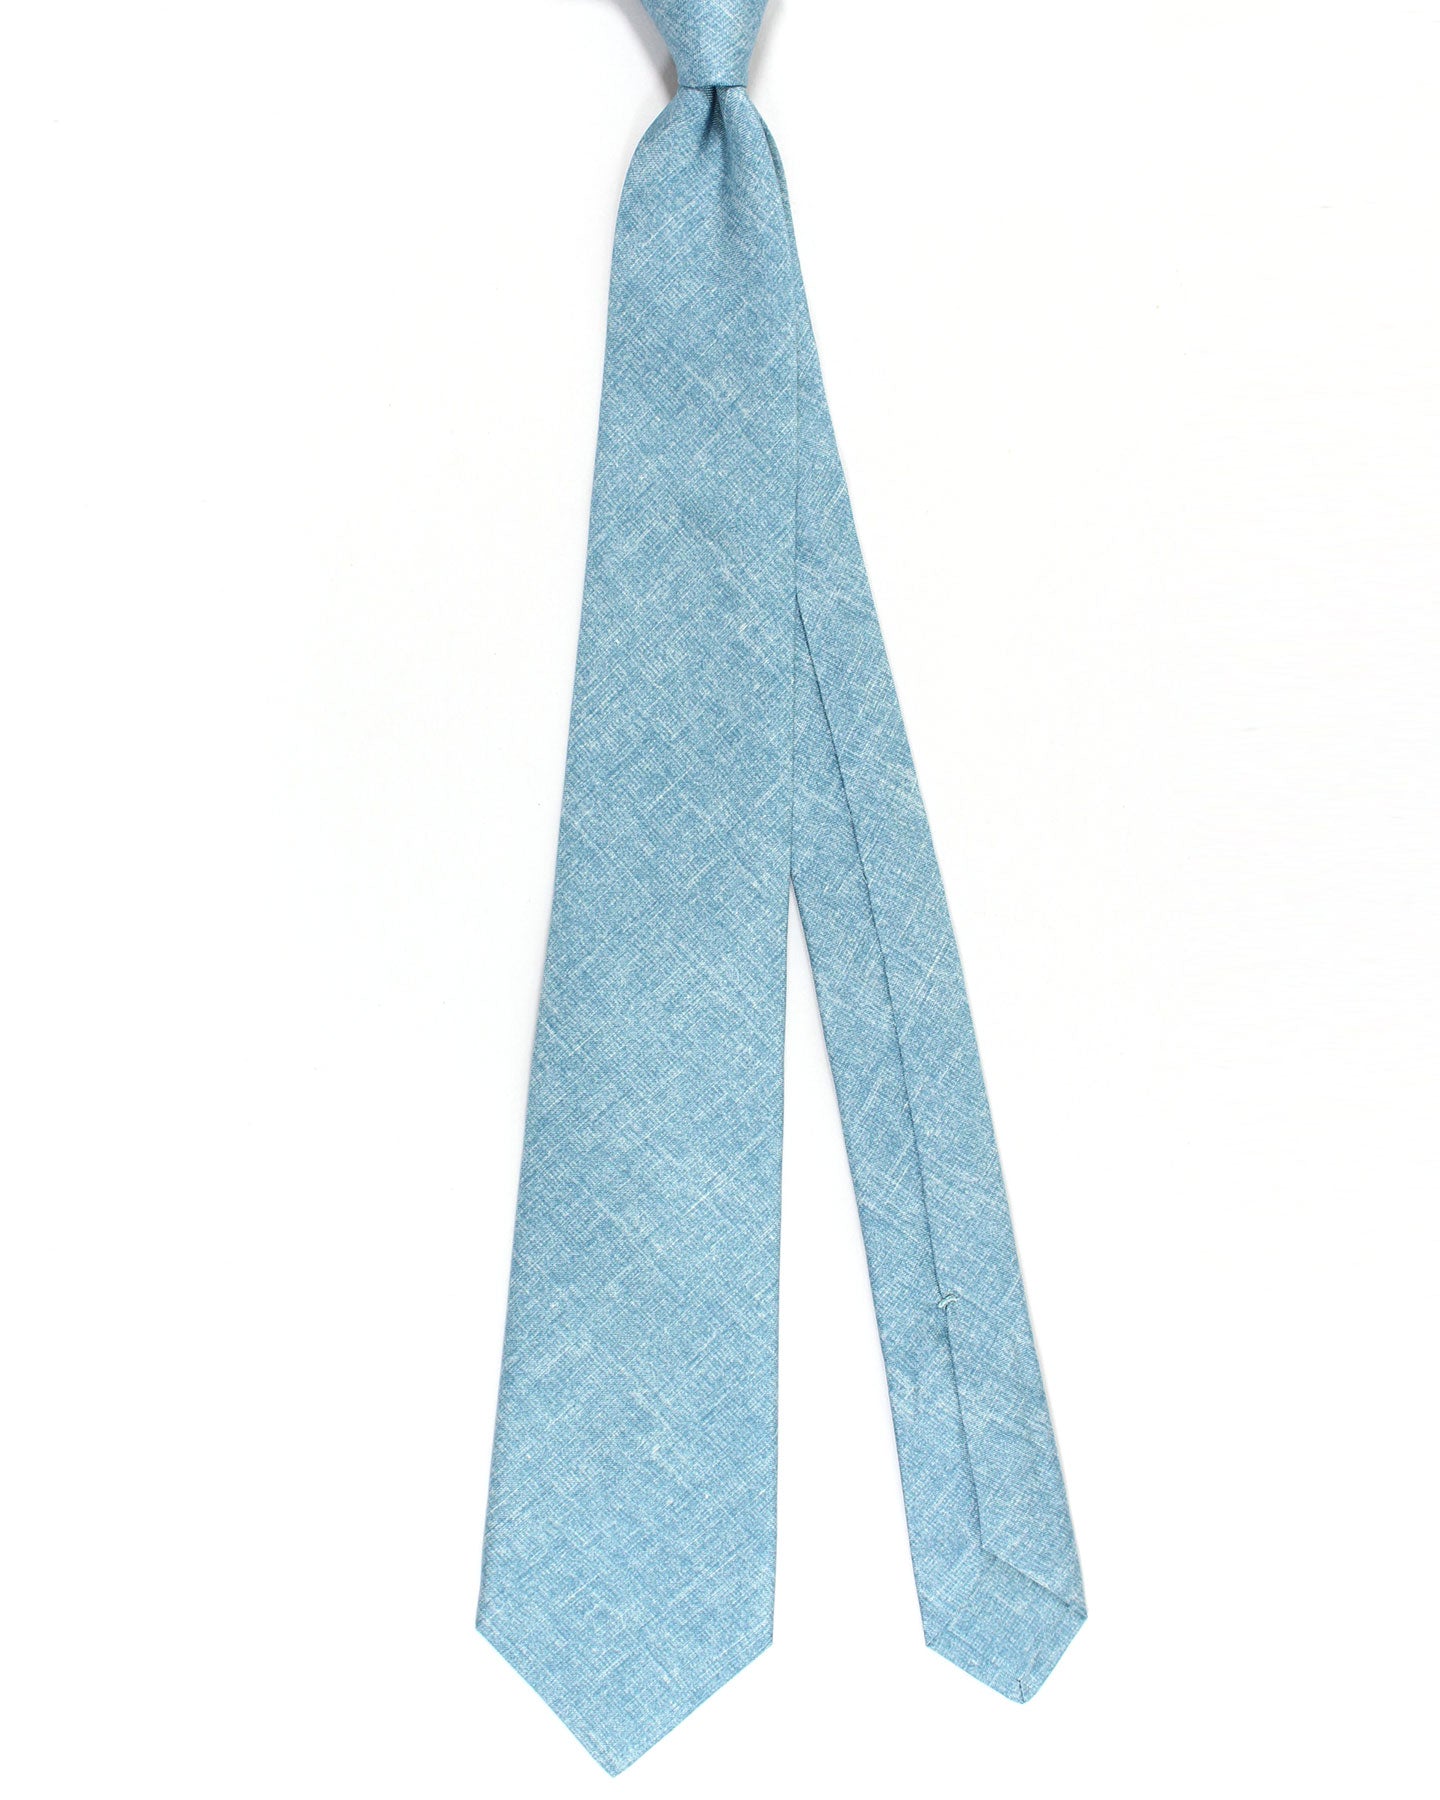 Kiton Sevenfold Tie Blue Solid Design Silk